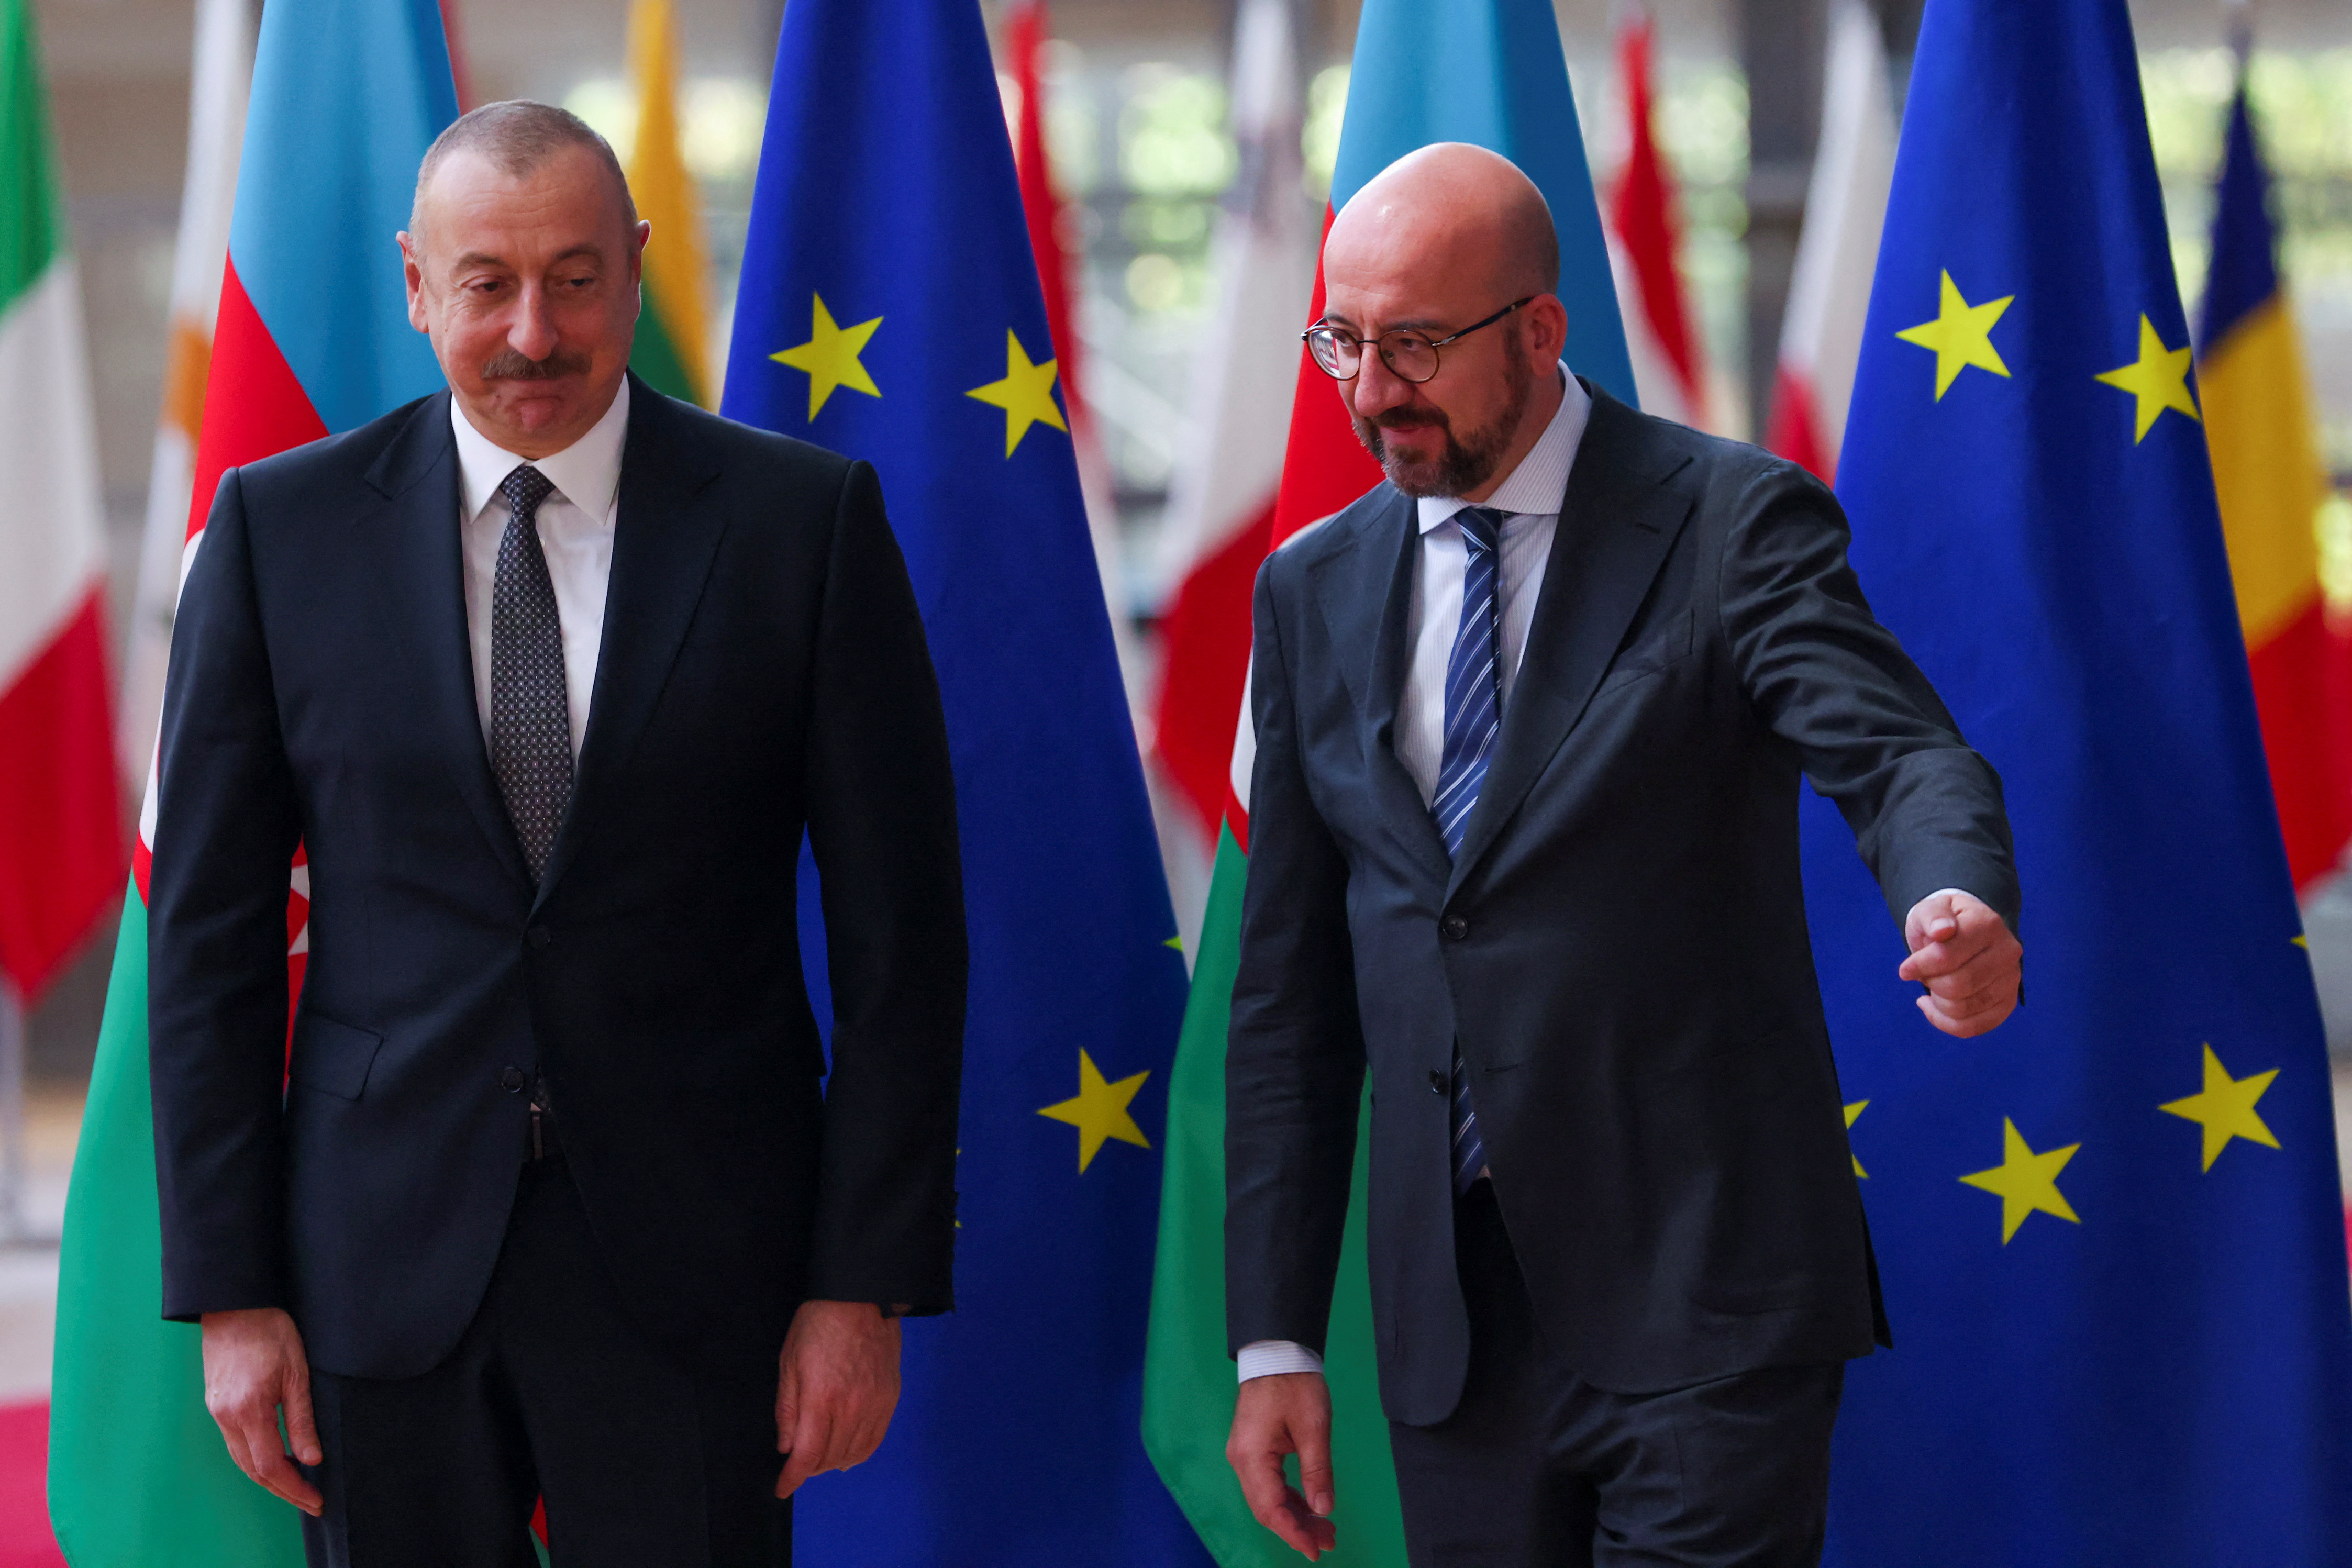 Azerbaijan's President Aliyev is welcomed by European Council President Michel in Brussels